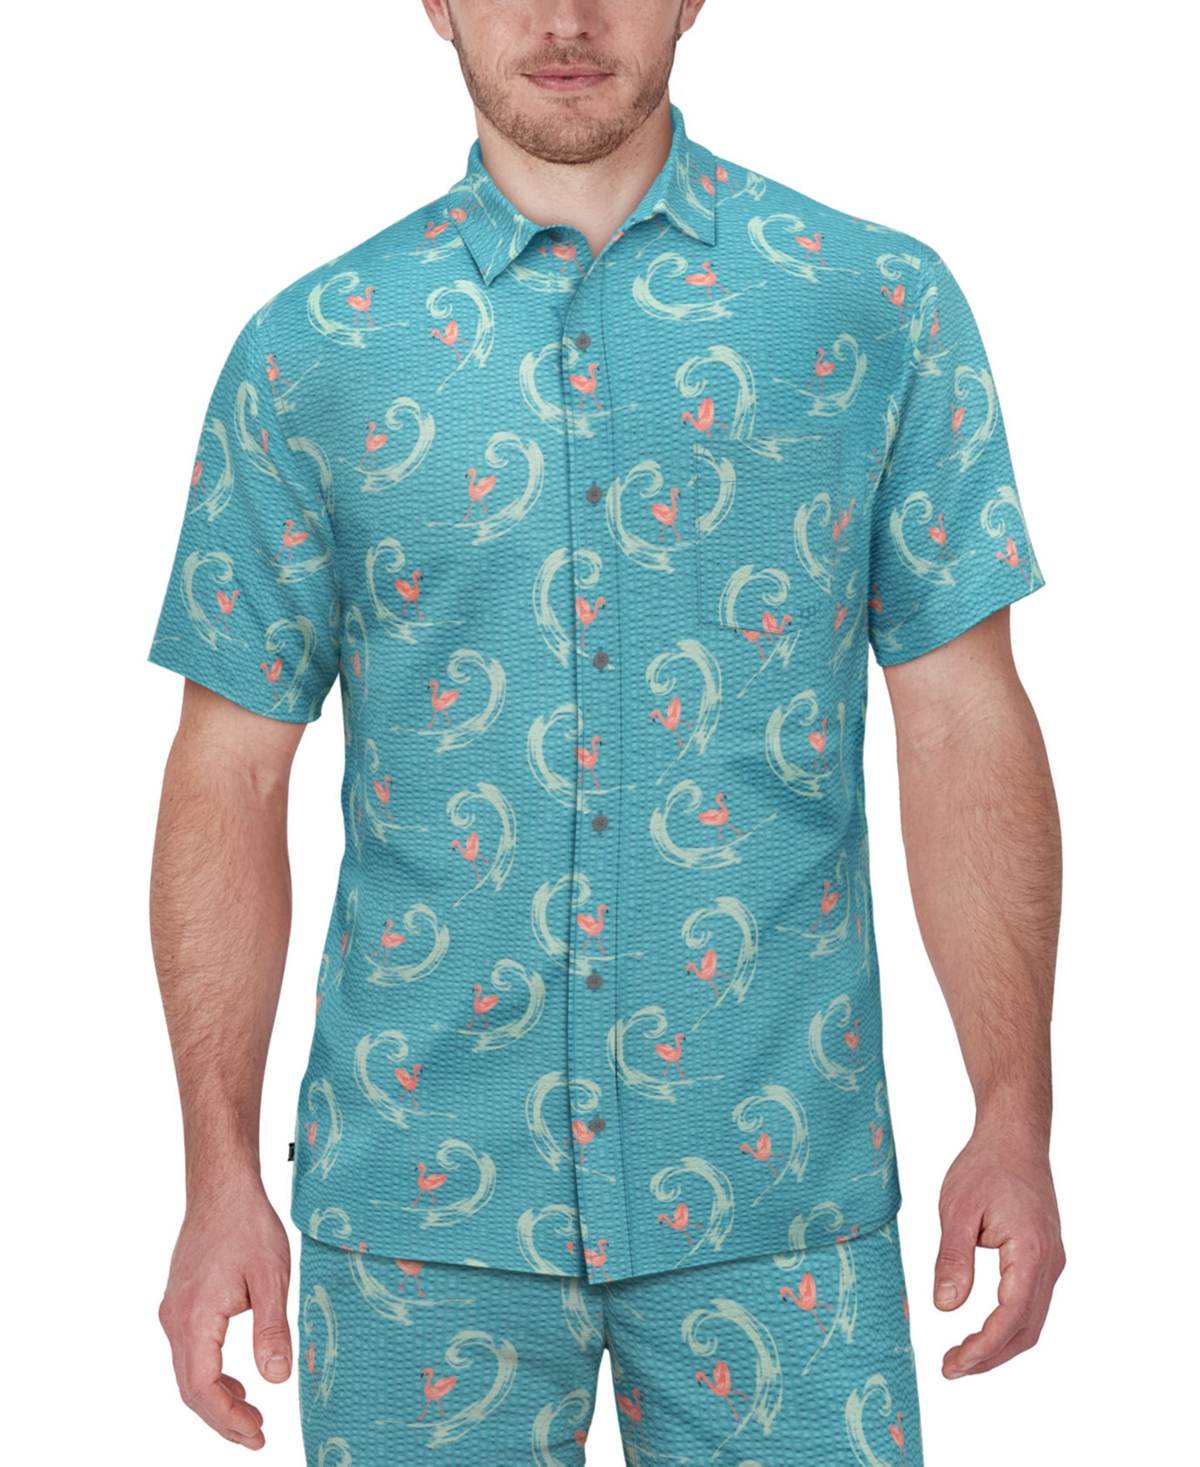 Men's Flamingo Seersucker Short Sleeve Performance Shirt - Cyan Blue